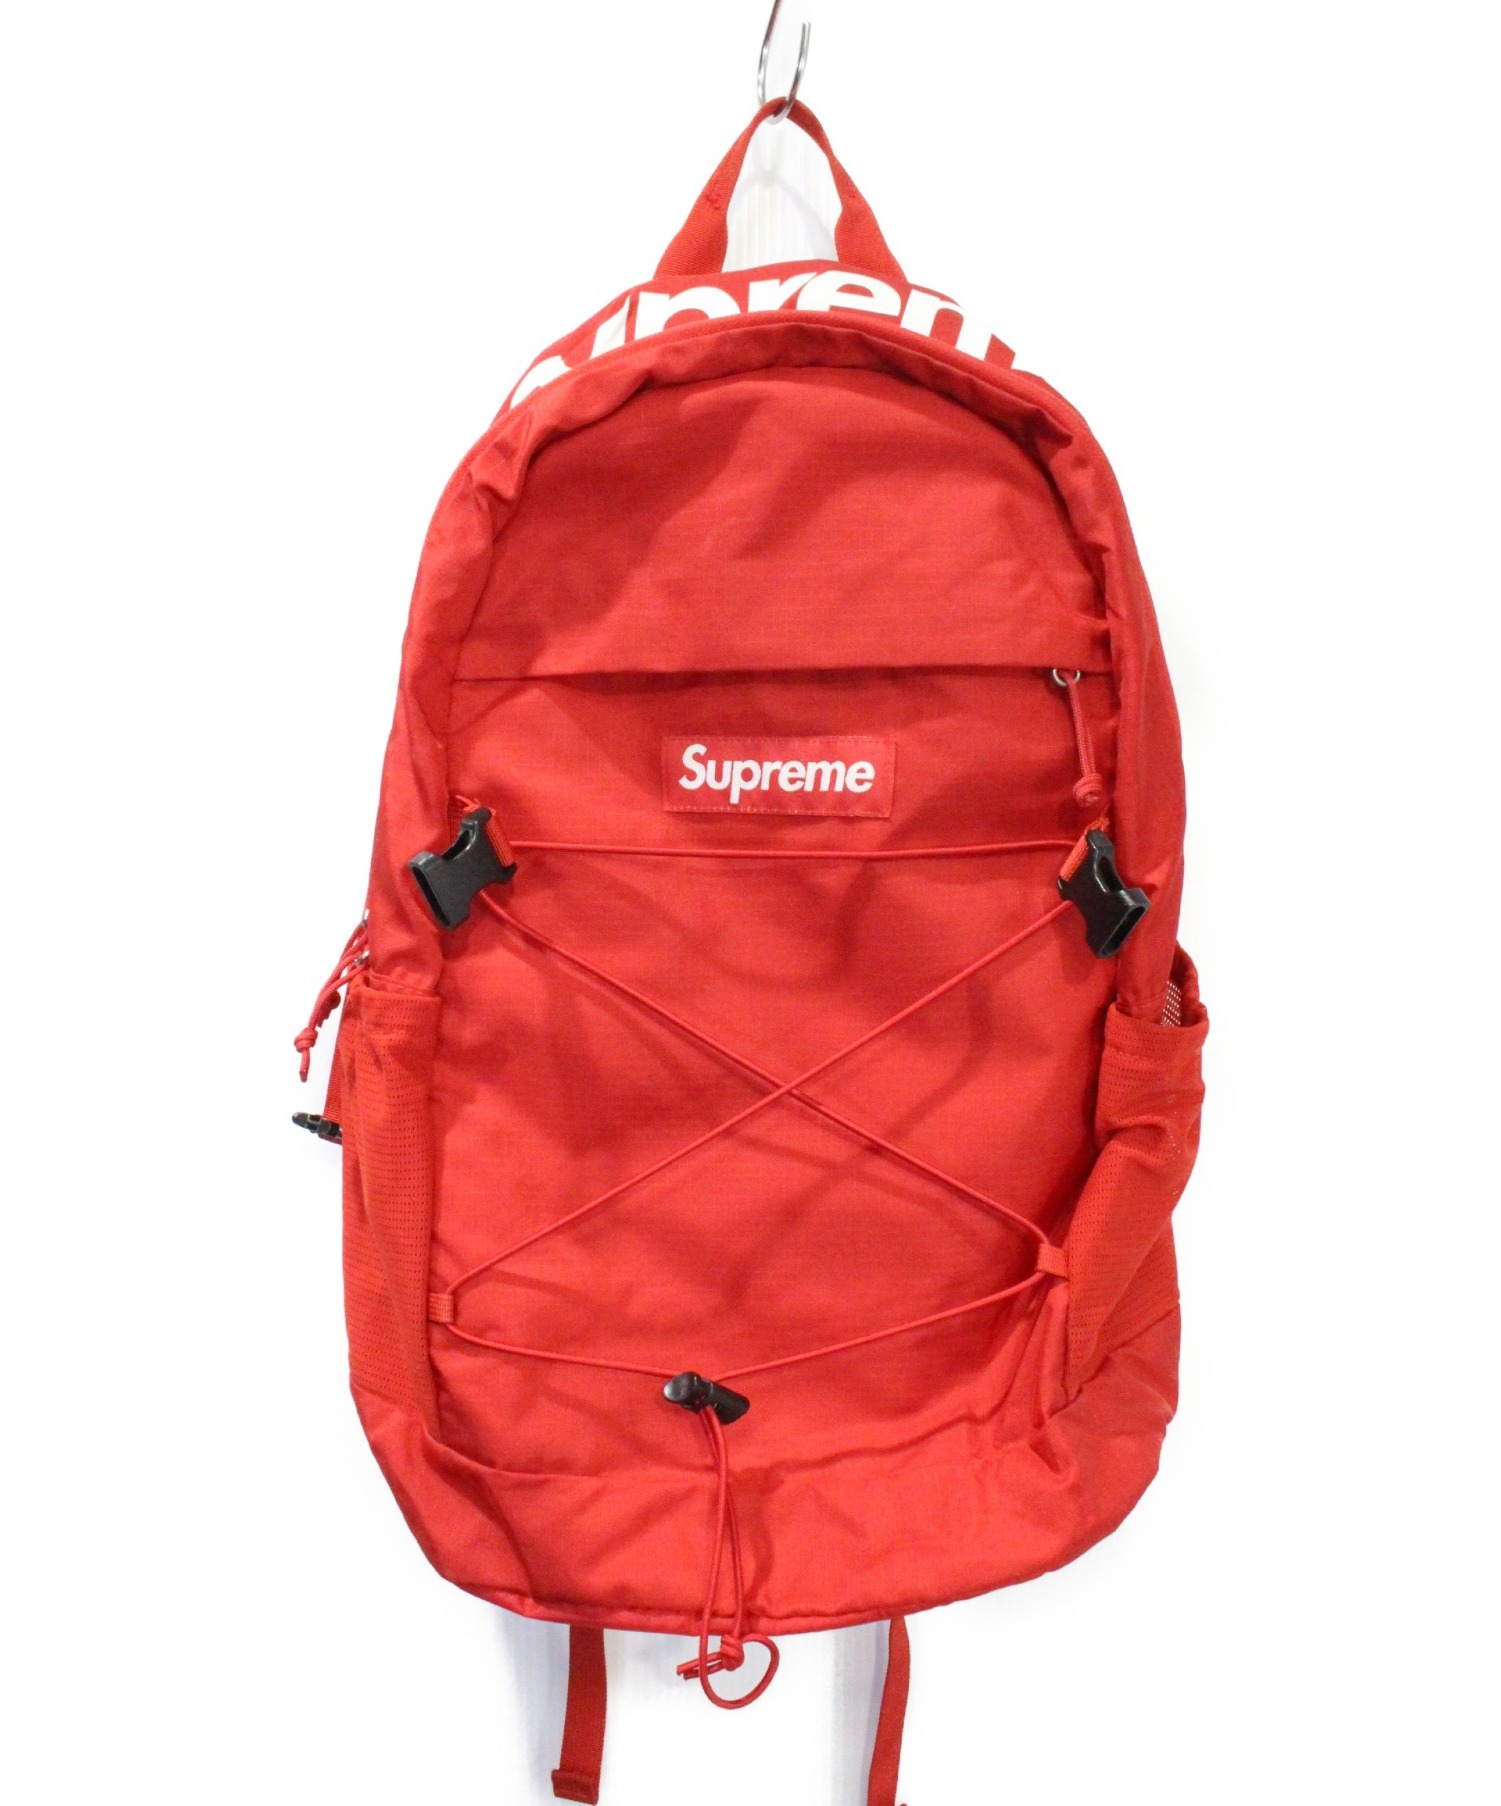 Supreme Backpack レッド